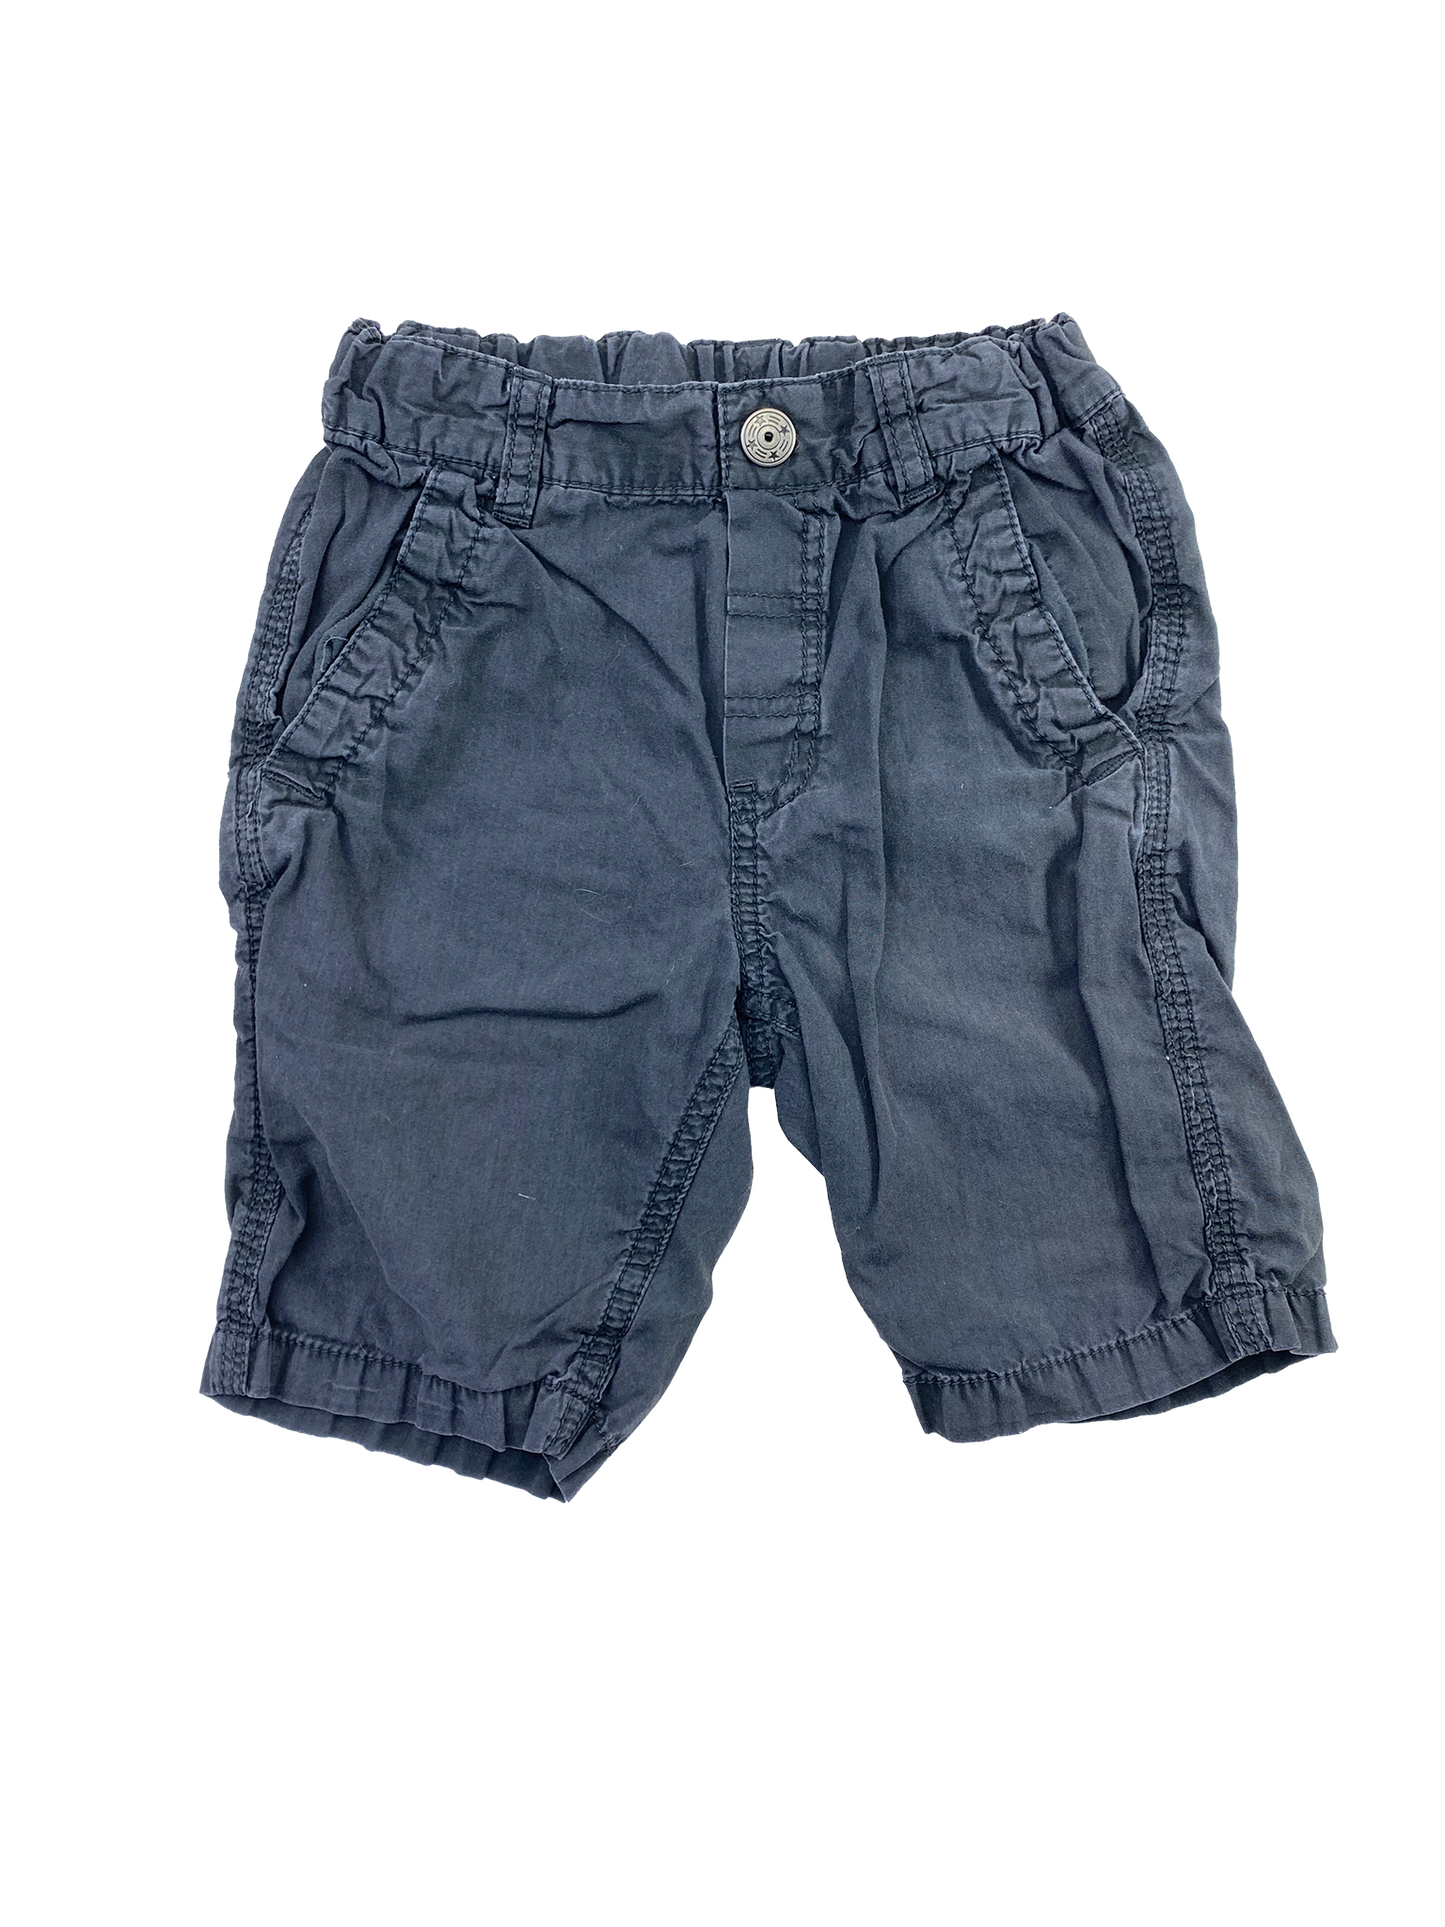 H&M Grey Shorts 4-5